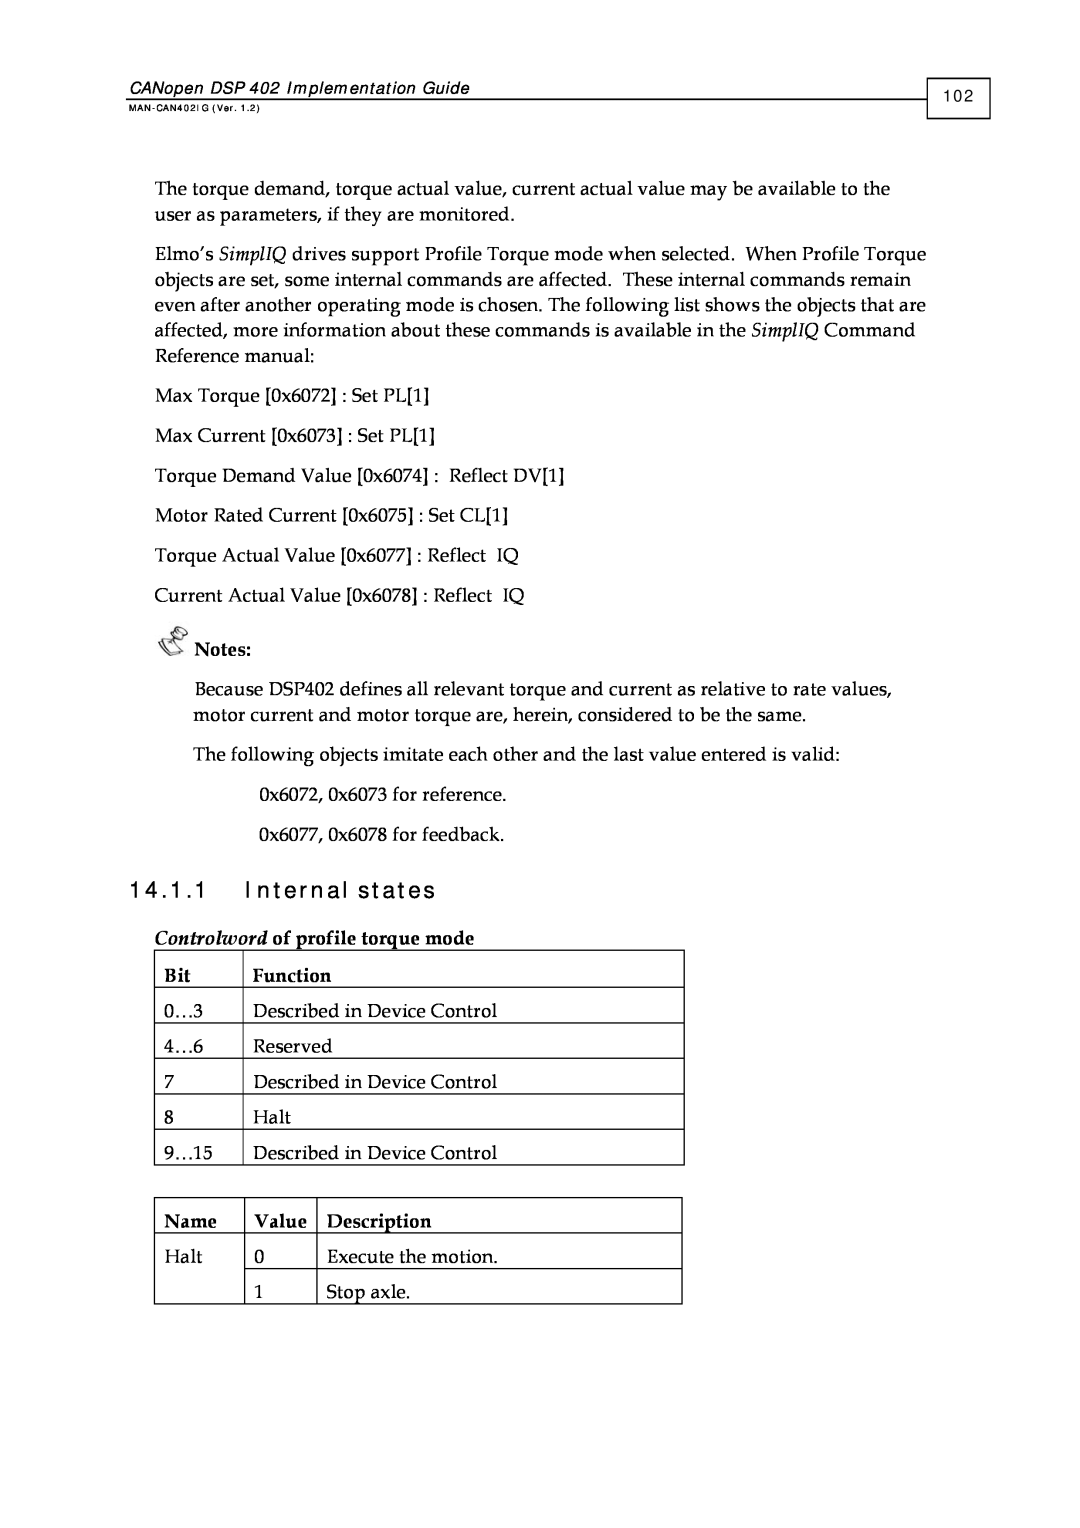 Elmo DSP 402 manual 14.1.1Internal states, Controlword of profile torque mode, Function, Name, Value, Description 